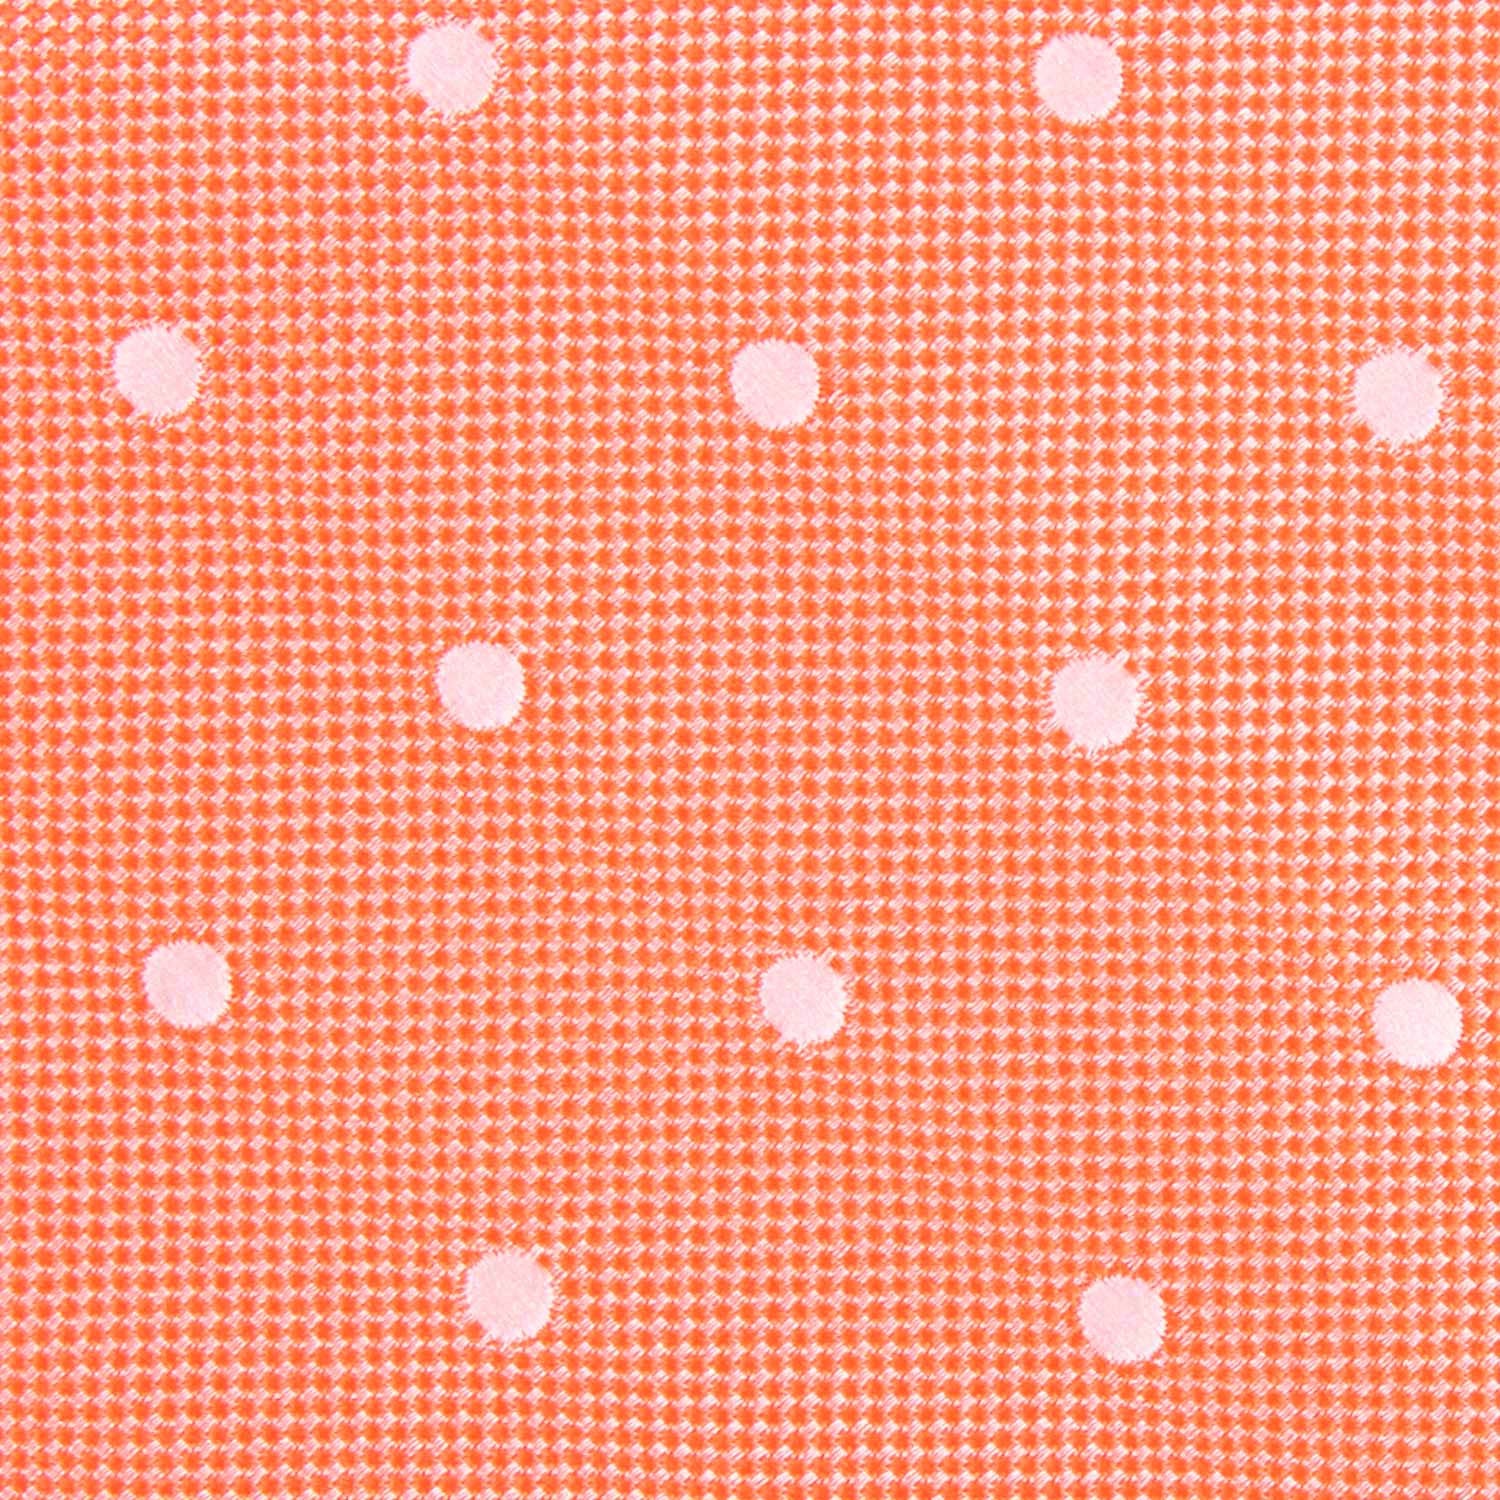 Coral Orange with White Polka Dots Fabric Skinny Tie M142